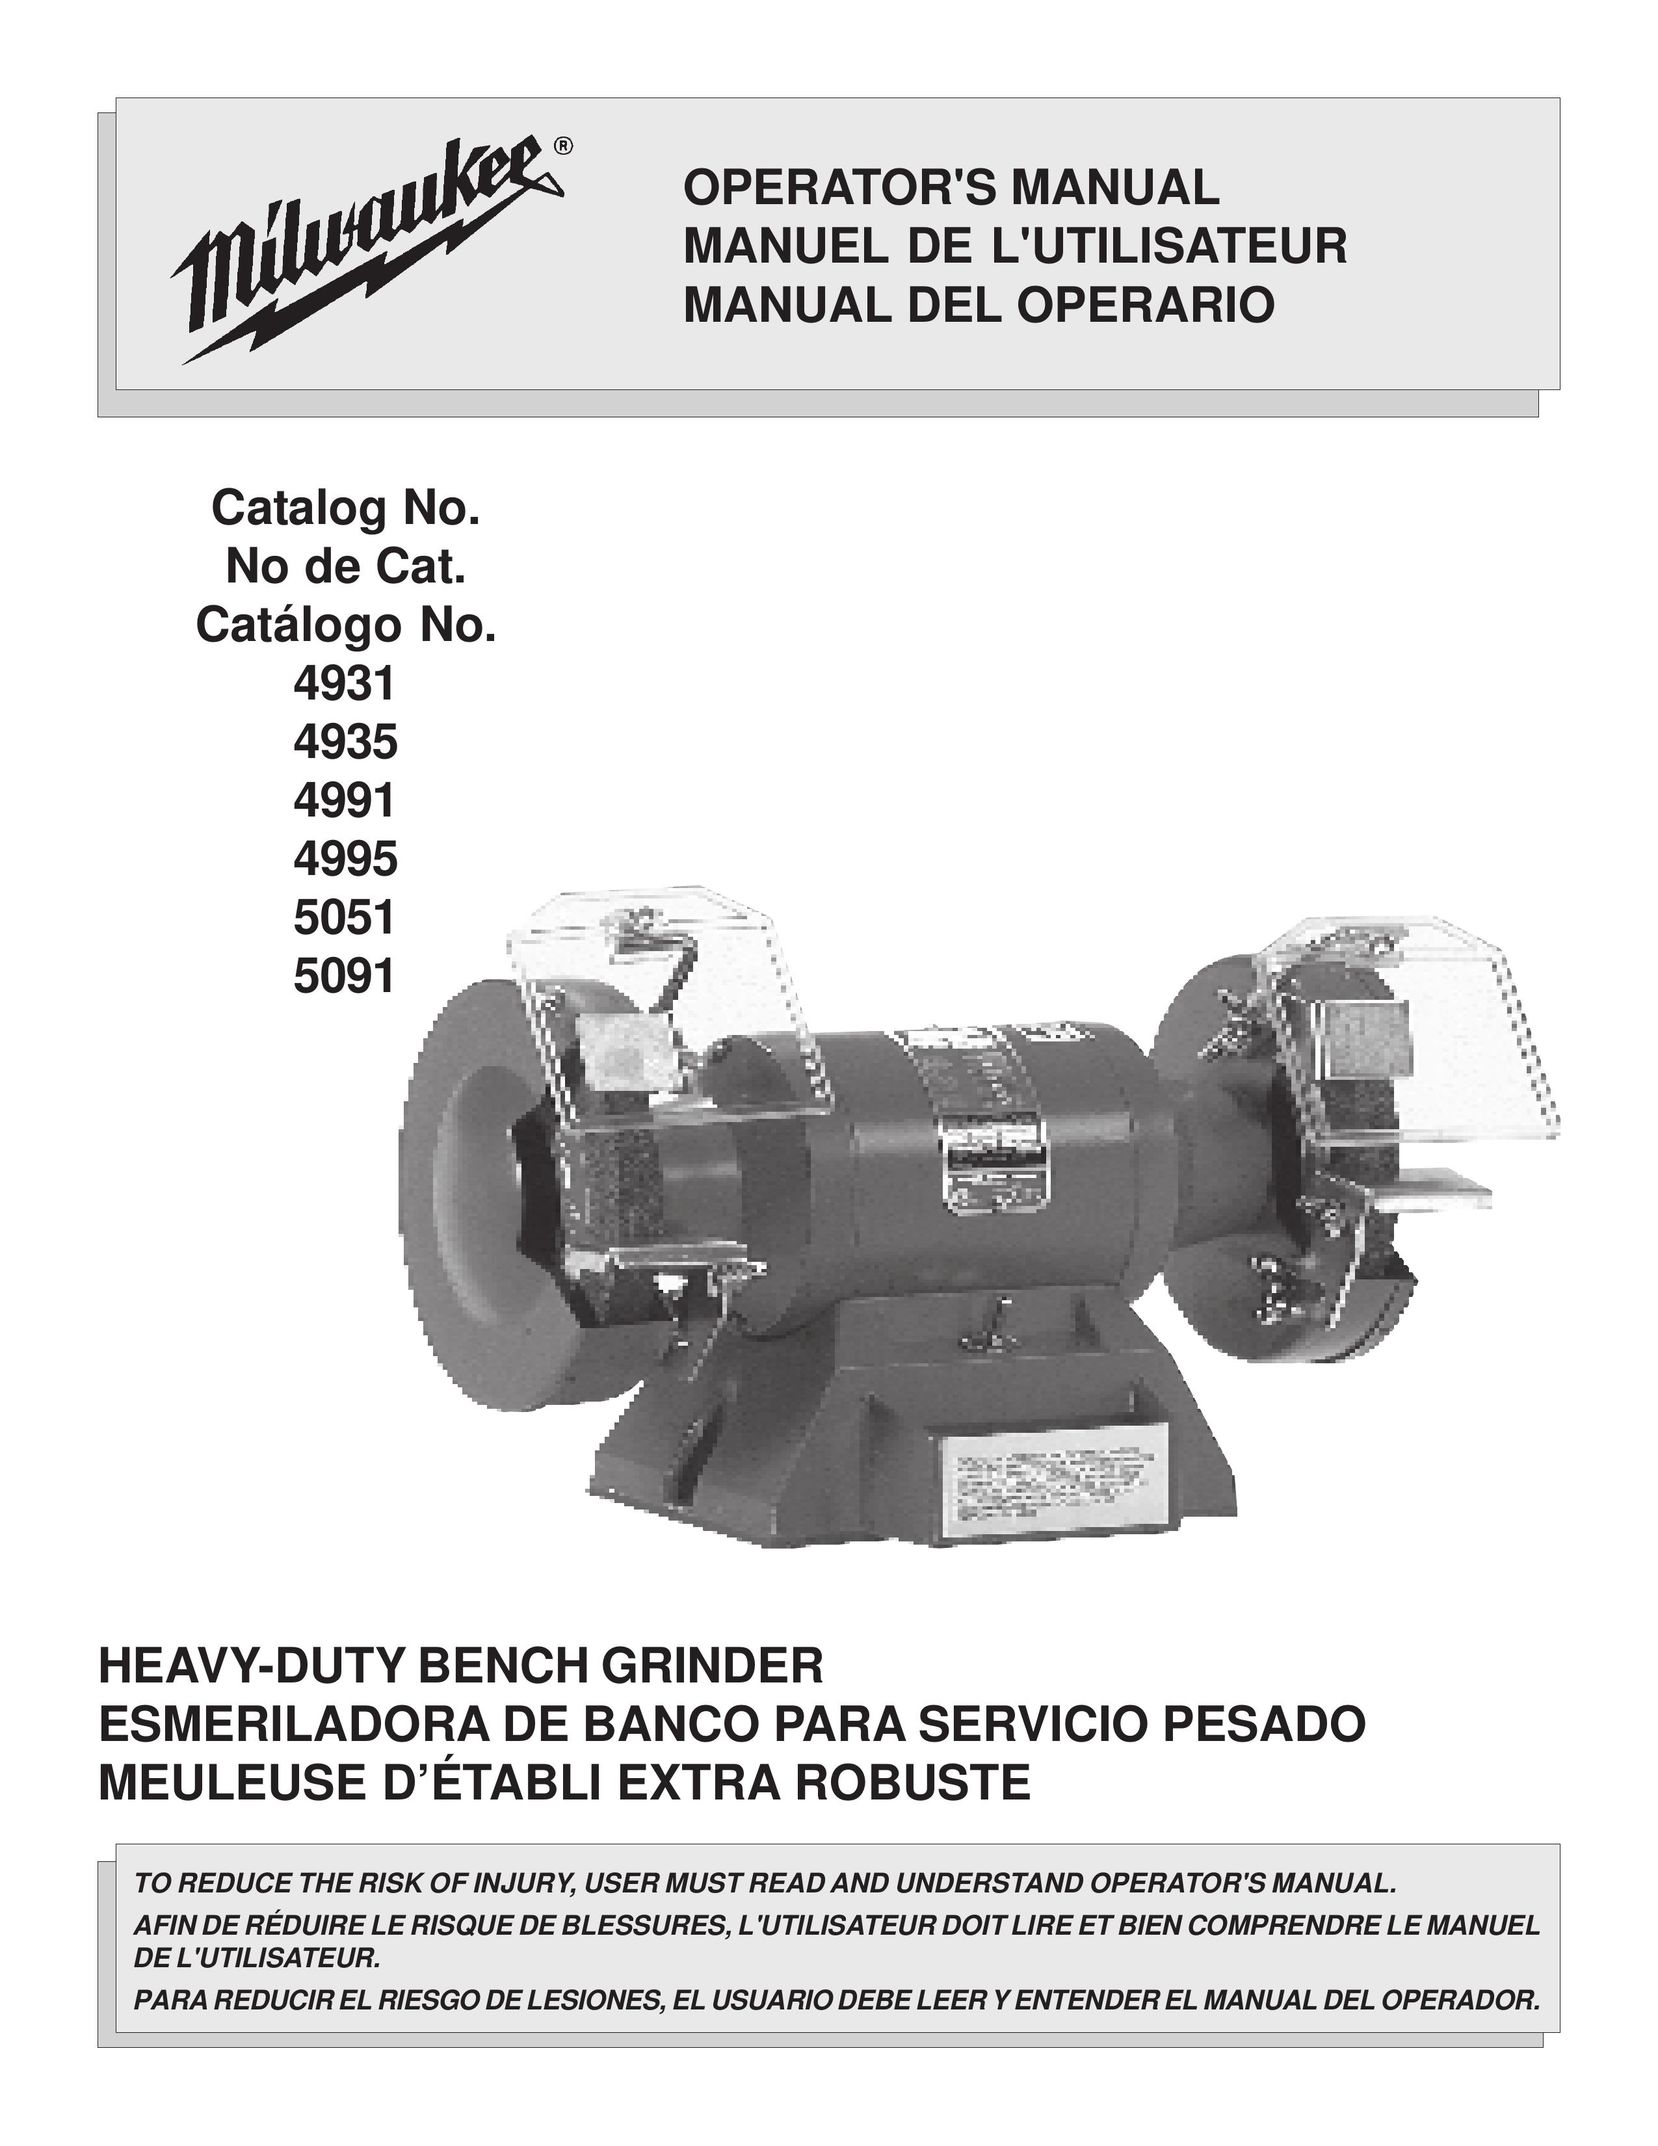 Milwaukee 4995 Grinder User Manual